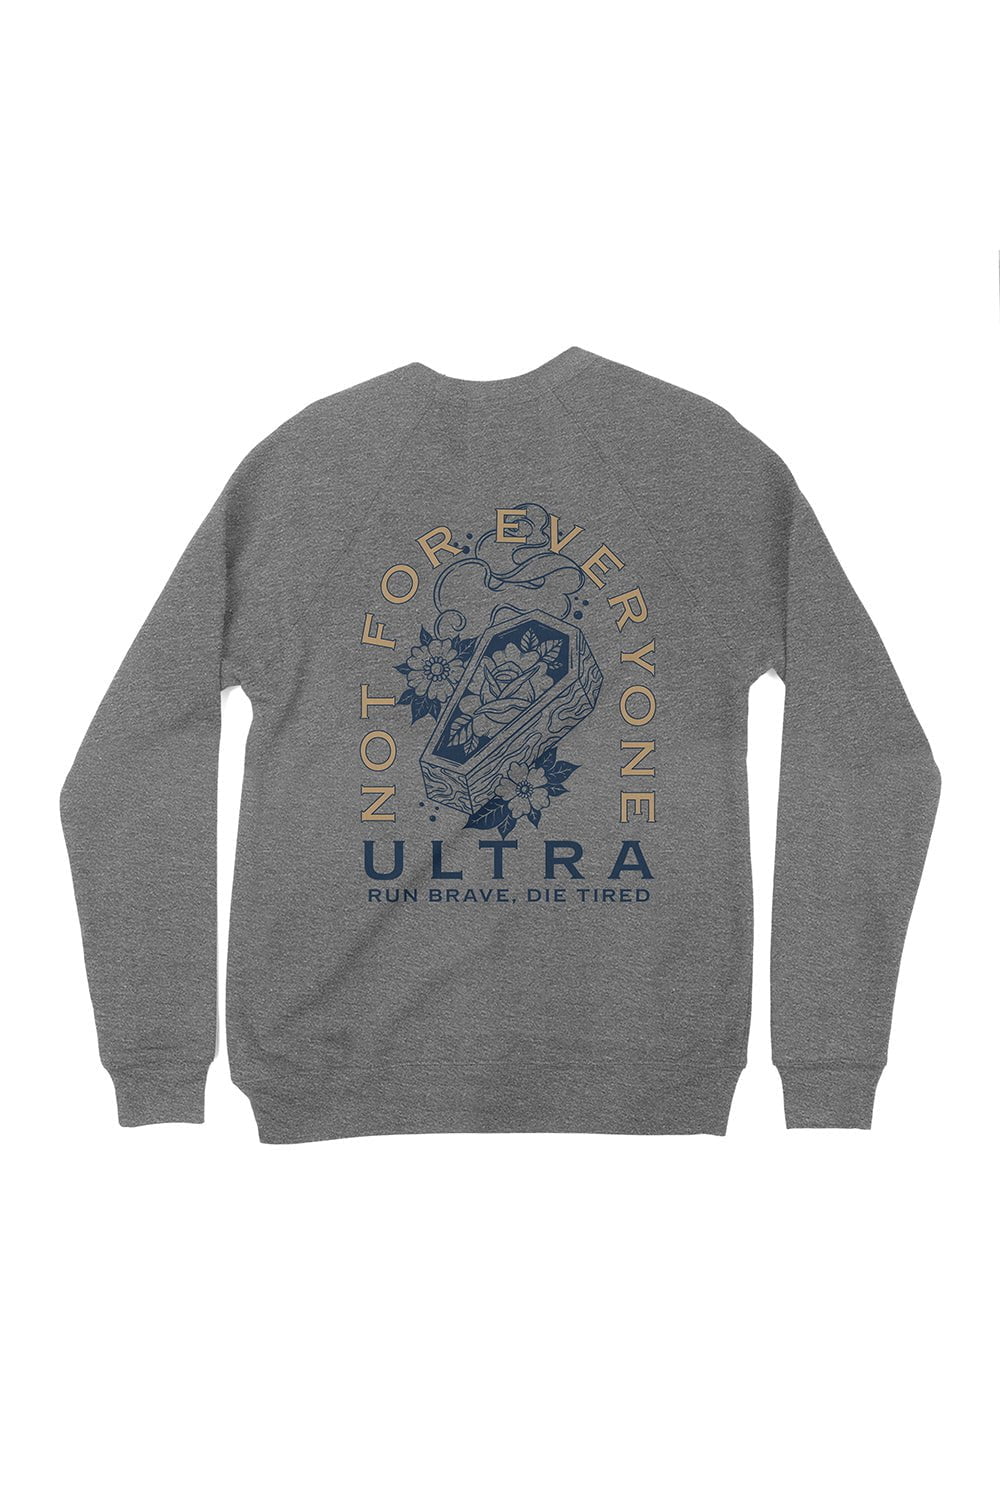 Sarah Marie Design Studio Sweatshirt XSmall / Grey Triblend Ultra Not For Everyone Sweatshirt